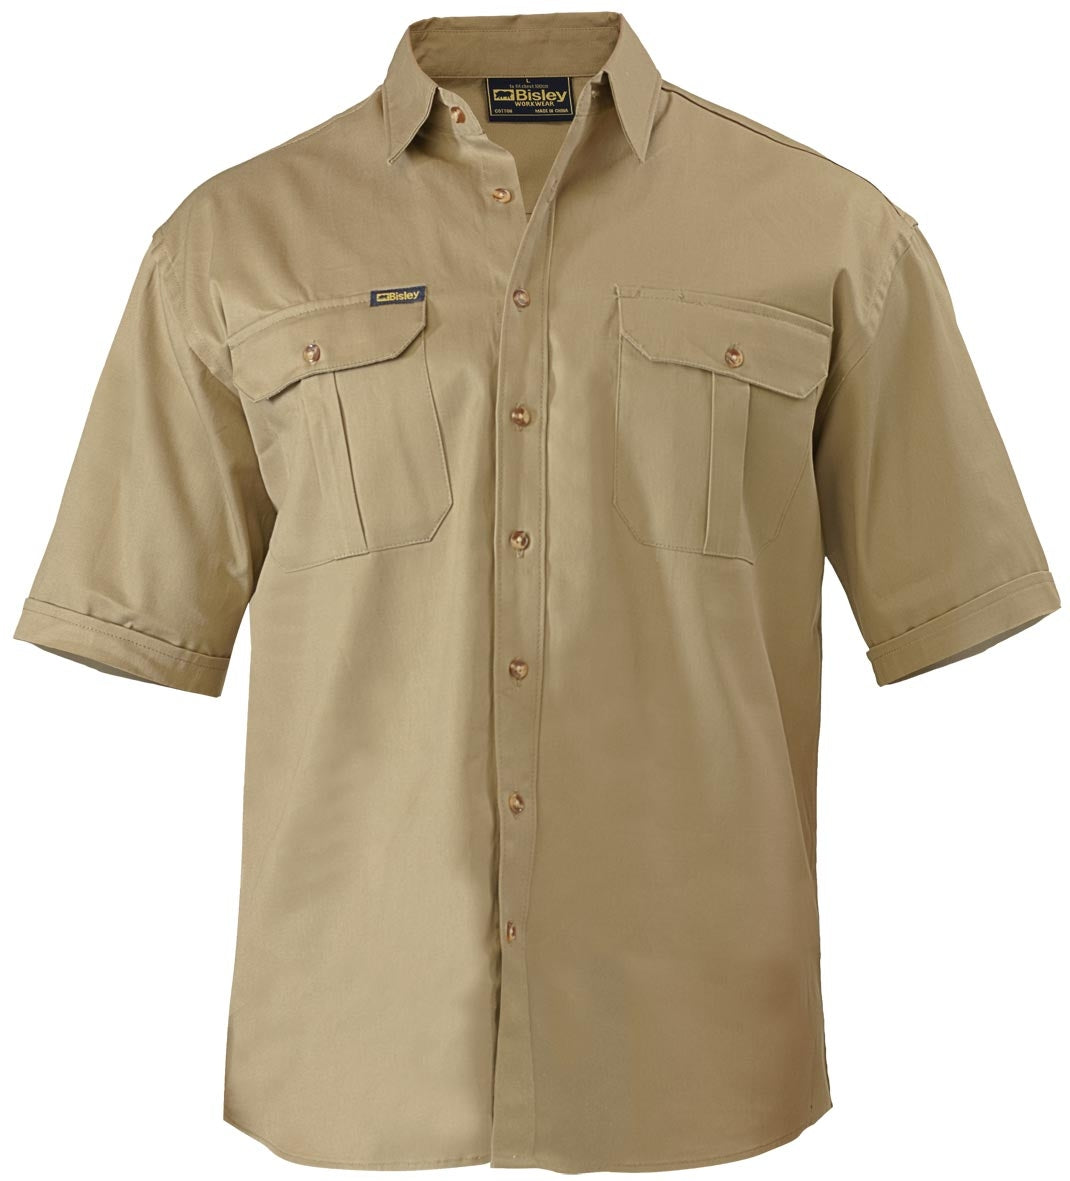 Bisley Original Cotton Drill Work Shirt - Short Sleeve S Khaki Workwear by Bisley | The Bloke Shop